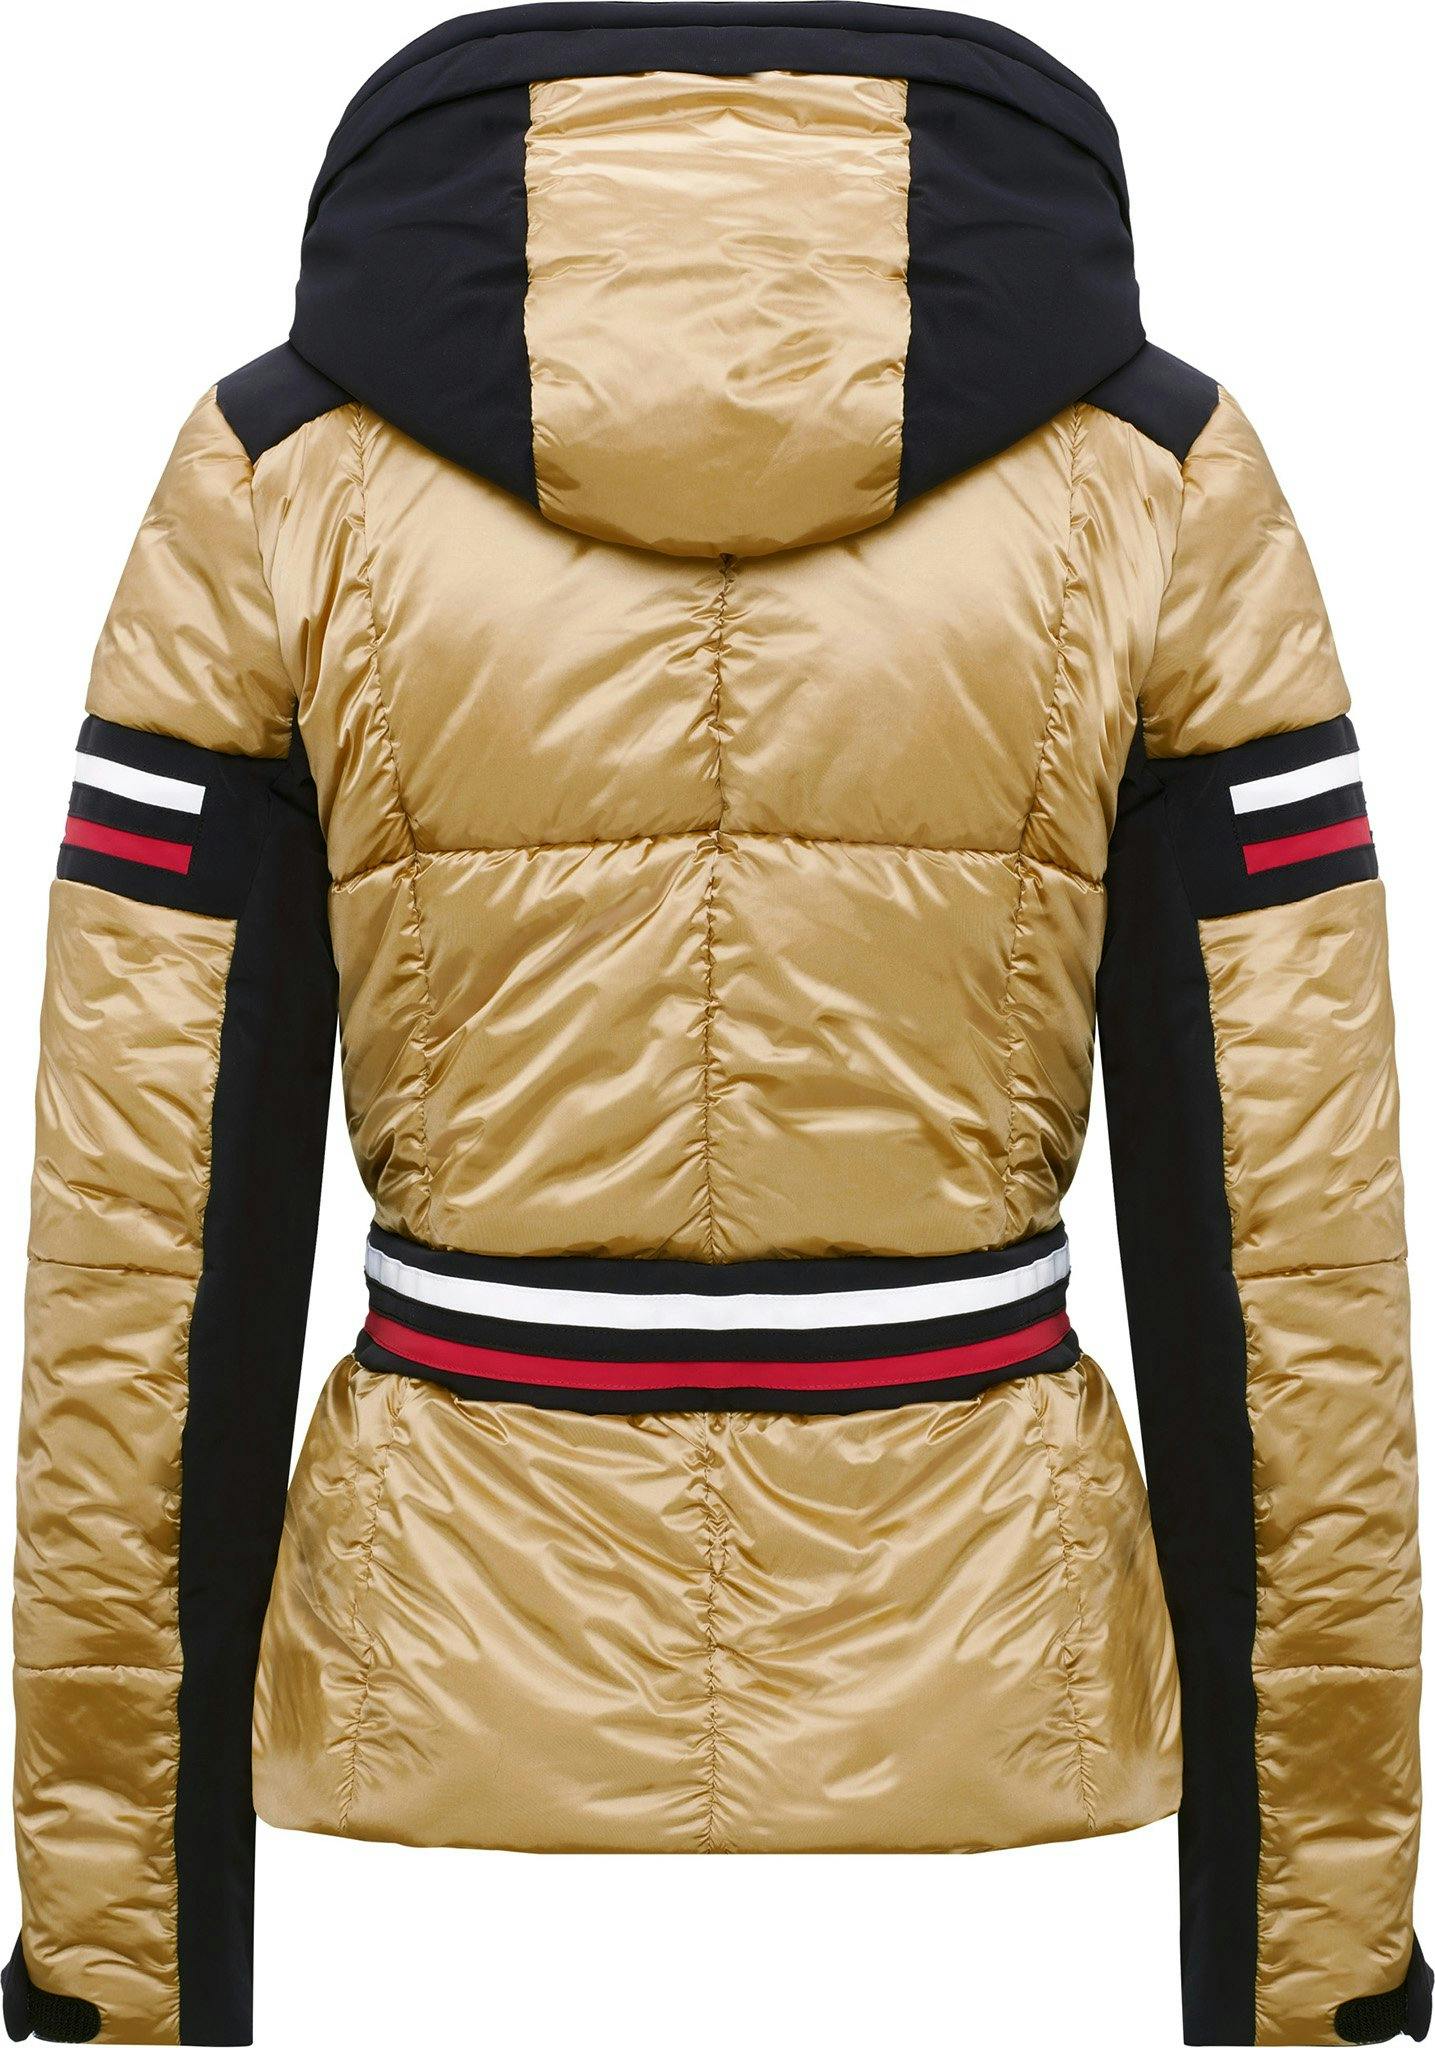 Product gallery image number 6 for product Nana Splendid Ski Jacket - Women's